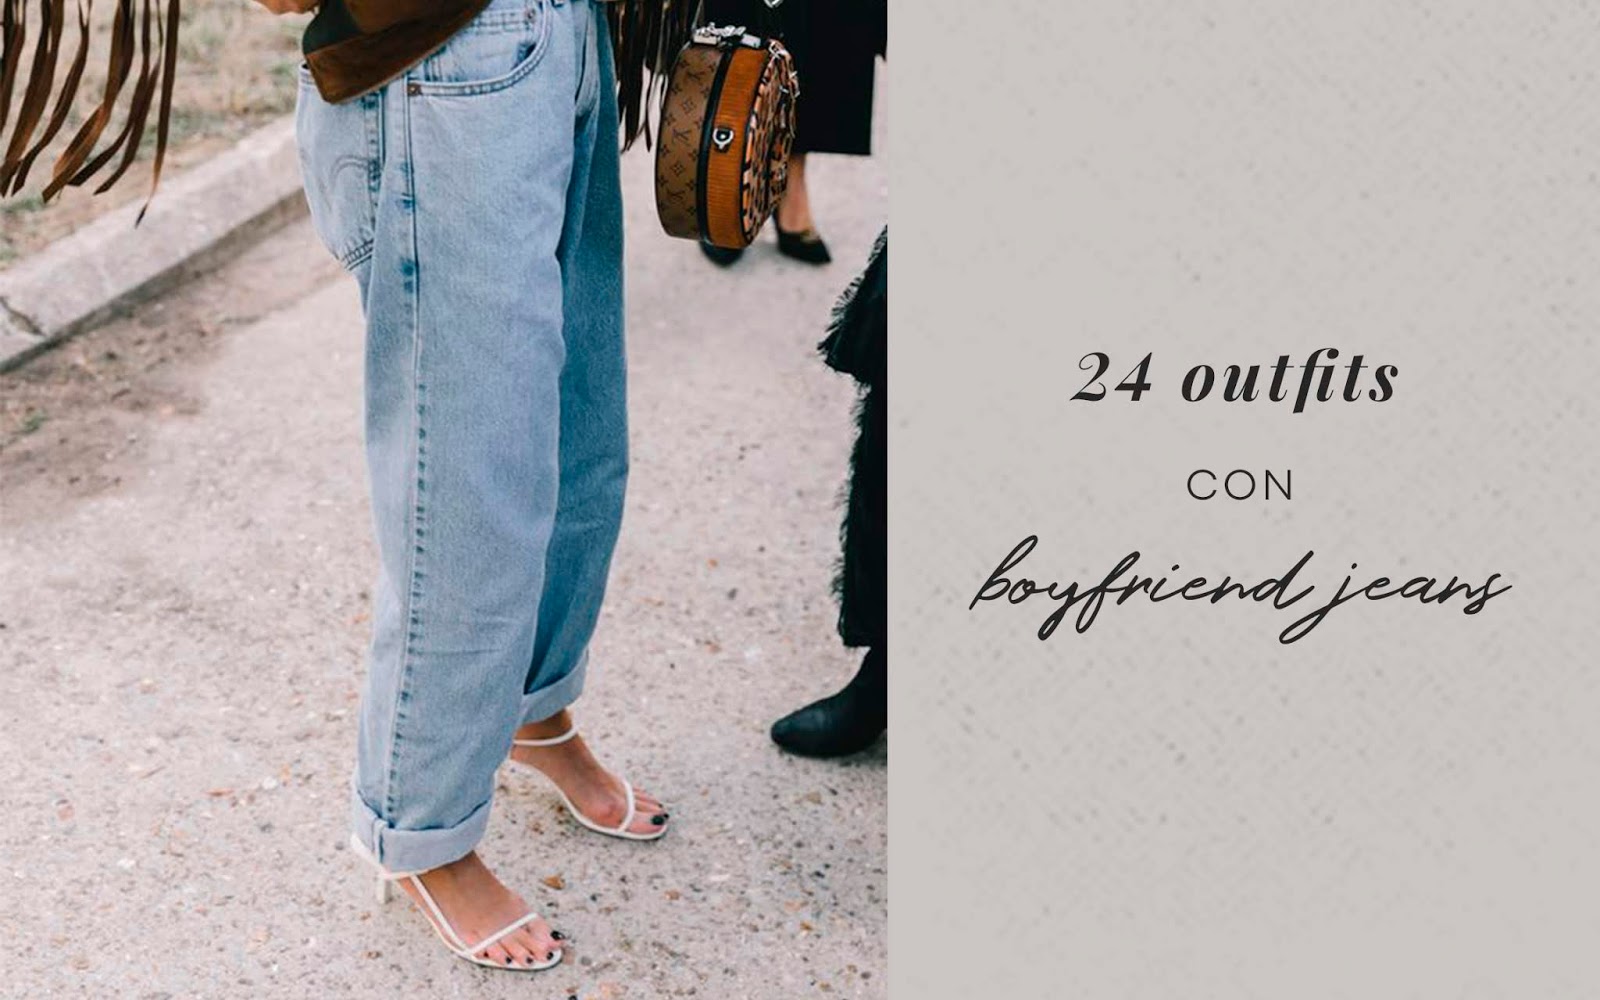 Exención collar resultado 24 outfits con Boyfriend Jeans | Aubrey and Me